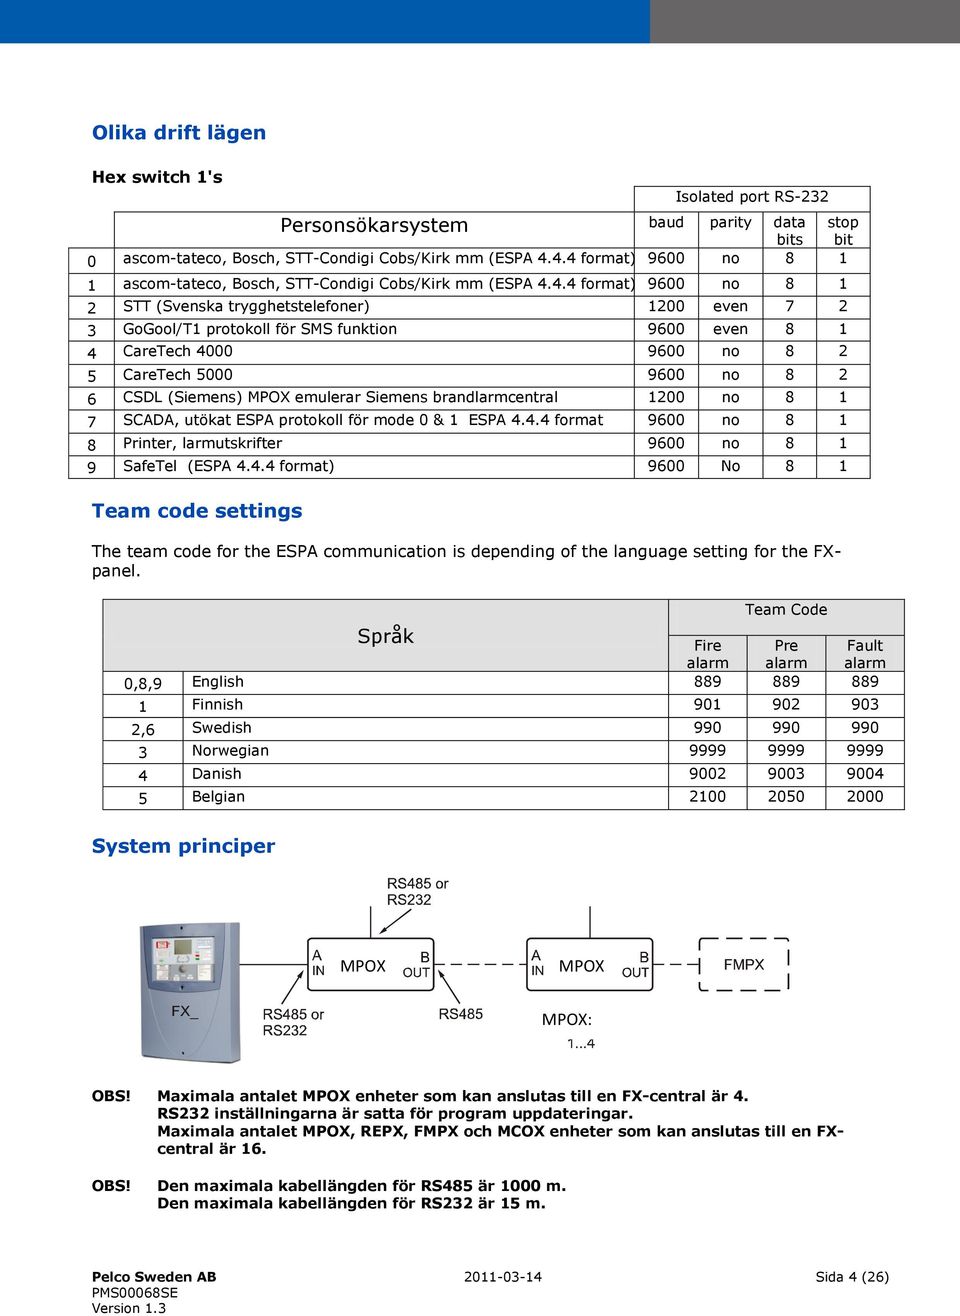 even 8 1 4 CareTech 4000 9600 no 8 2 5 CareTech 5000 9600 no 8 2 6 CSDL (Siemens) MPOX emulerar Siemens brandlarmcentral 1200 no 8 1 7 SCADA, utökat ESPA protokoll för mode 0 & 1 ESPA 4.4.4 format 9600 no 8 1 8 Printer, larmutskrifter 9600 no 8 1 9 SafeTel (ESPA 4.